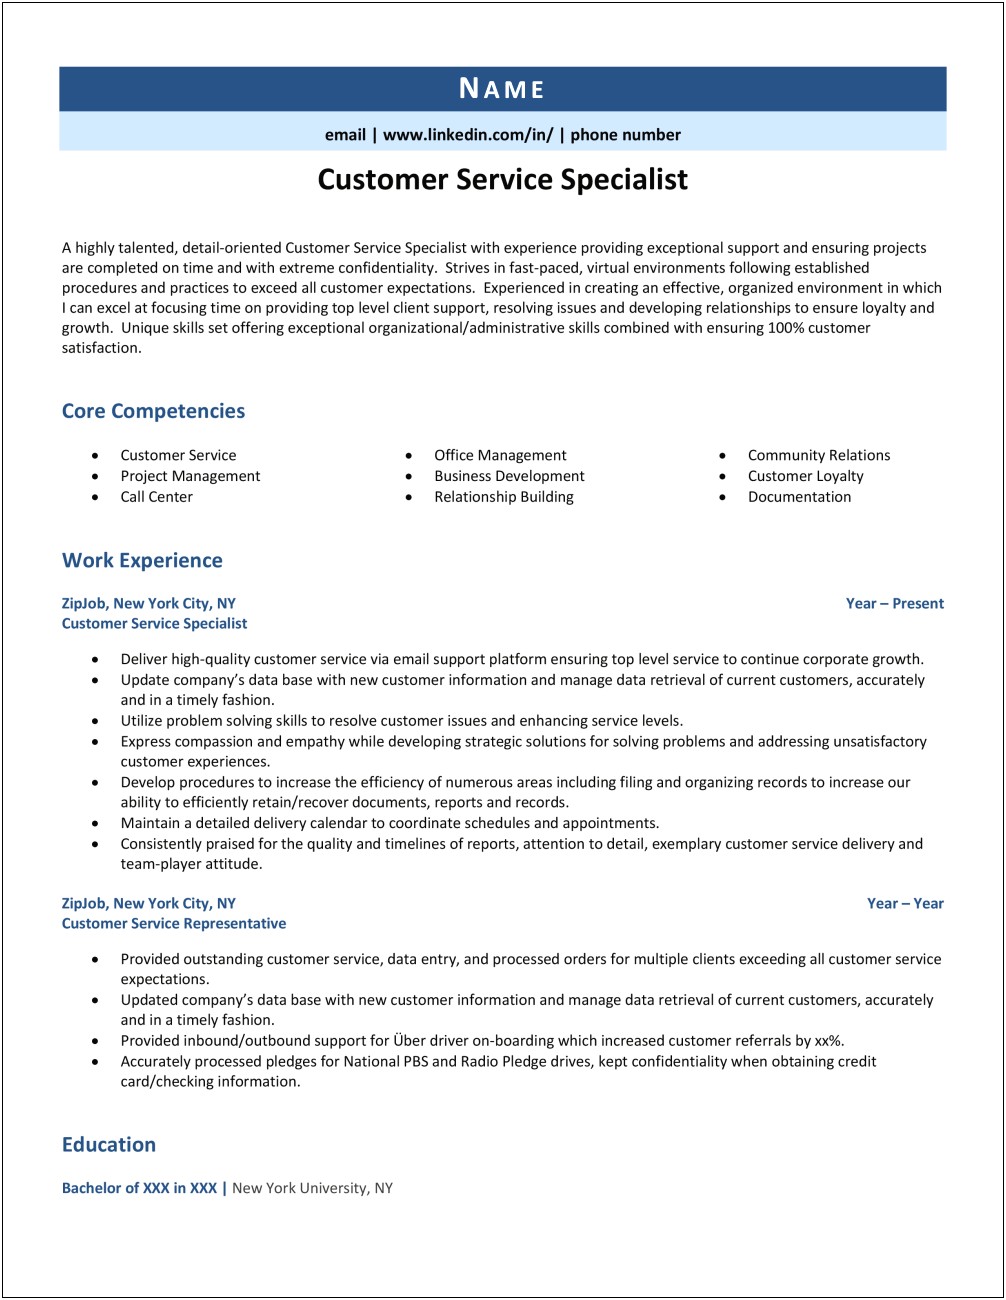 Customer Service Specialist Resume Skills